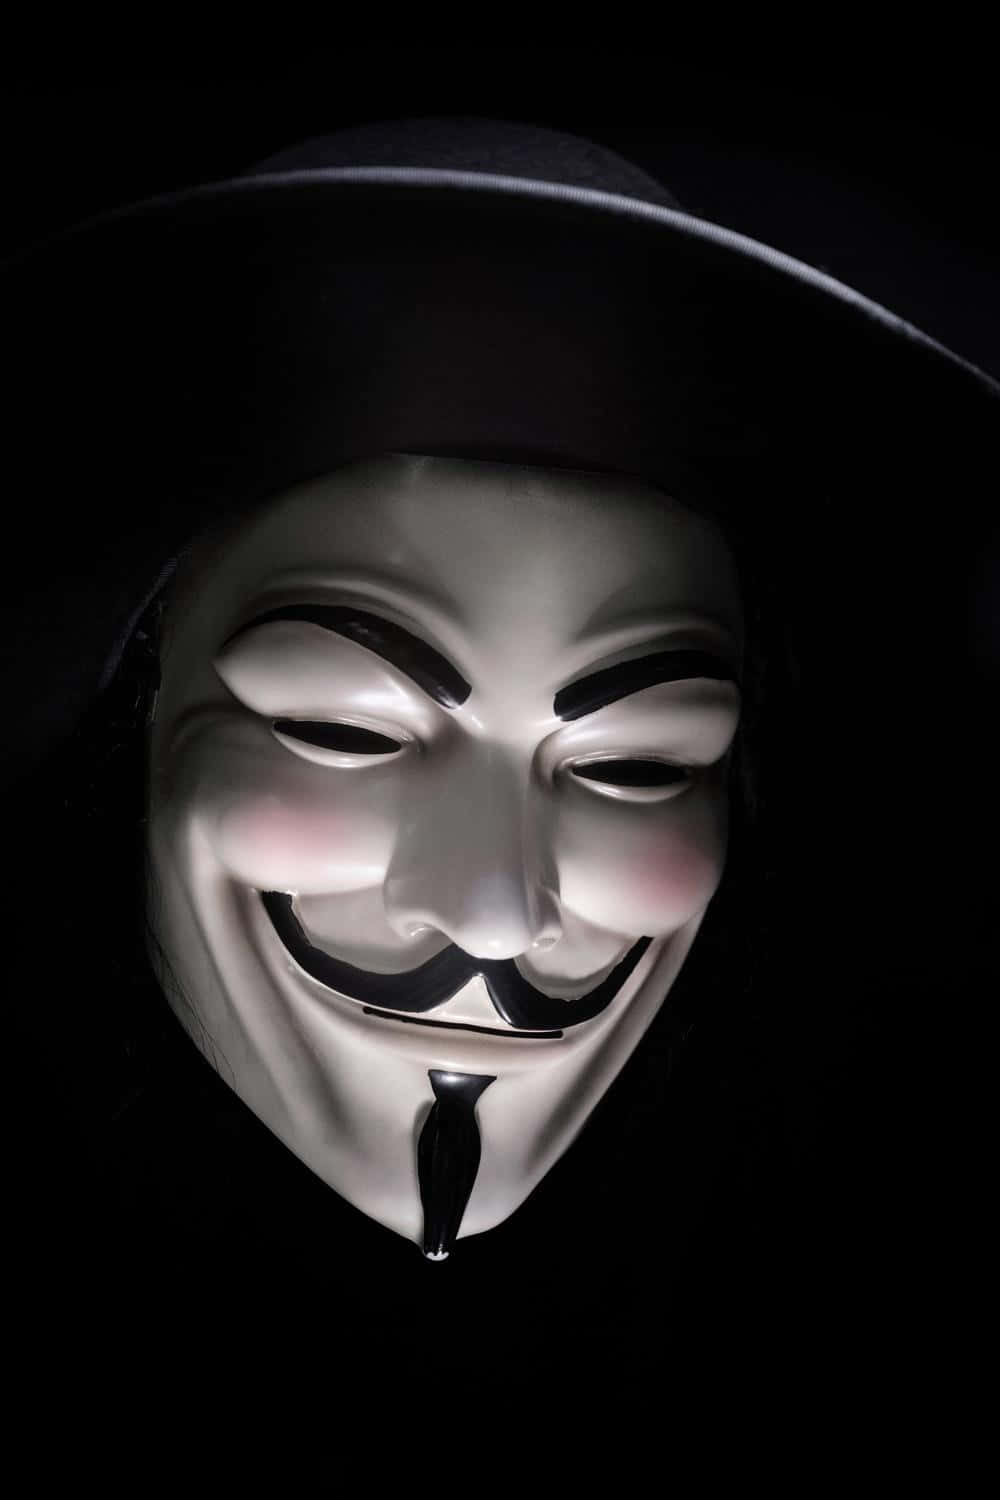 A V For Vendetta Mask Is Shown Against A Black Background